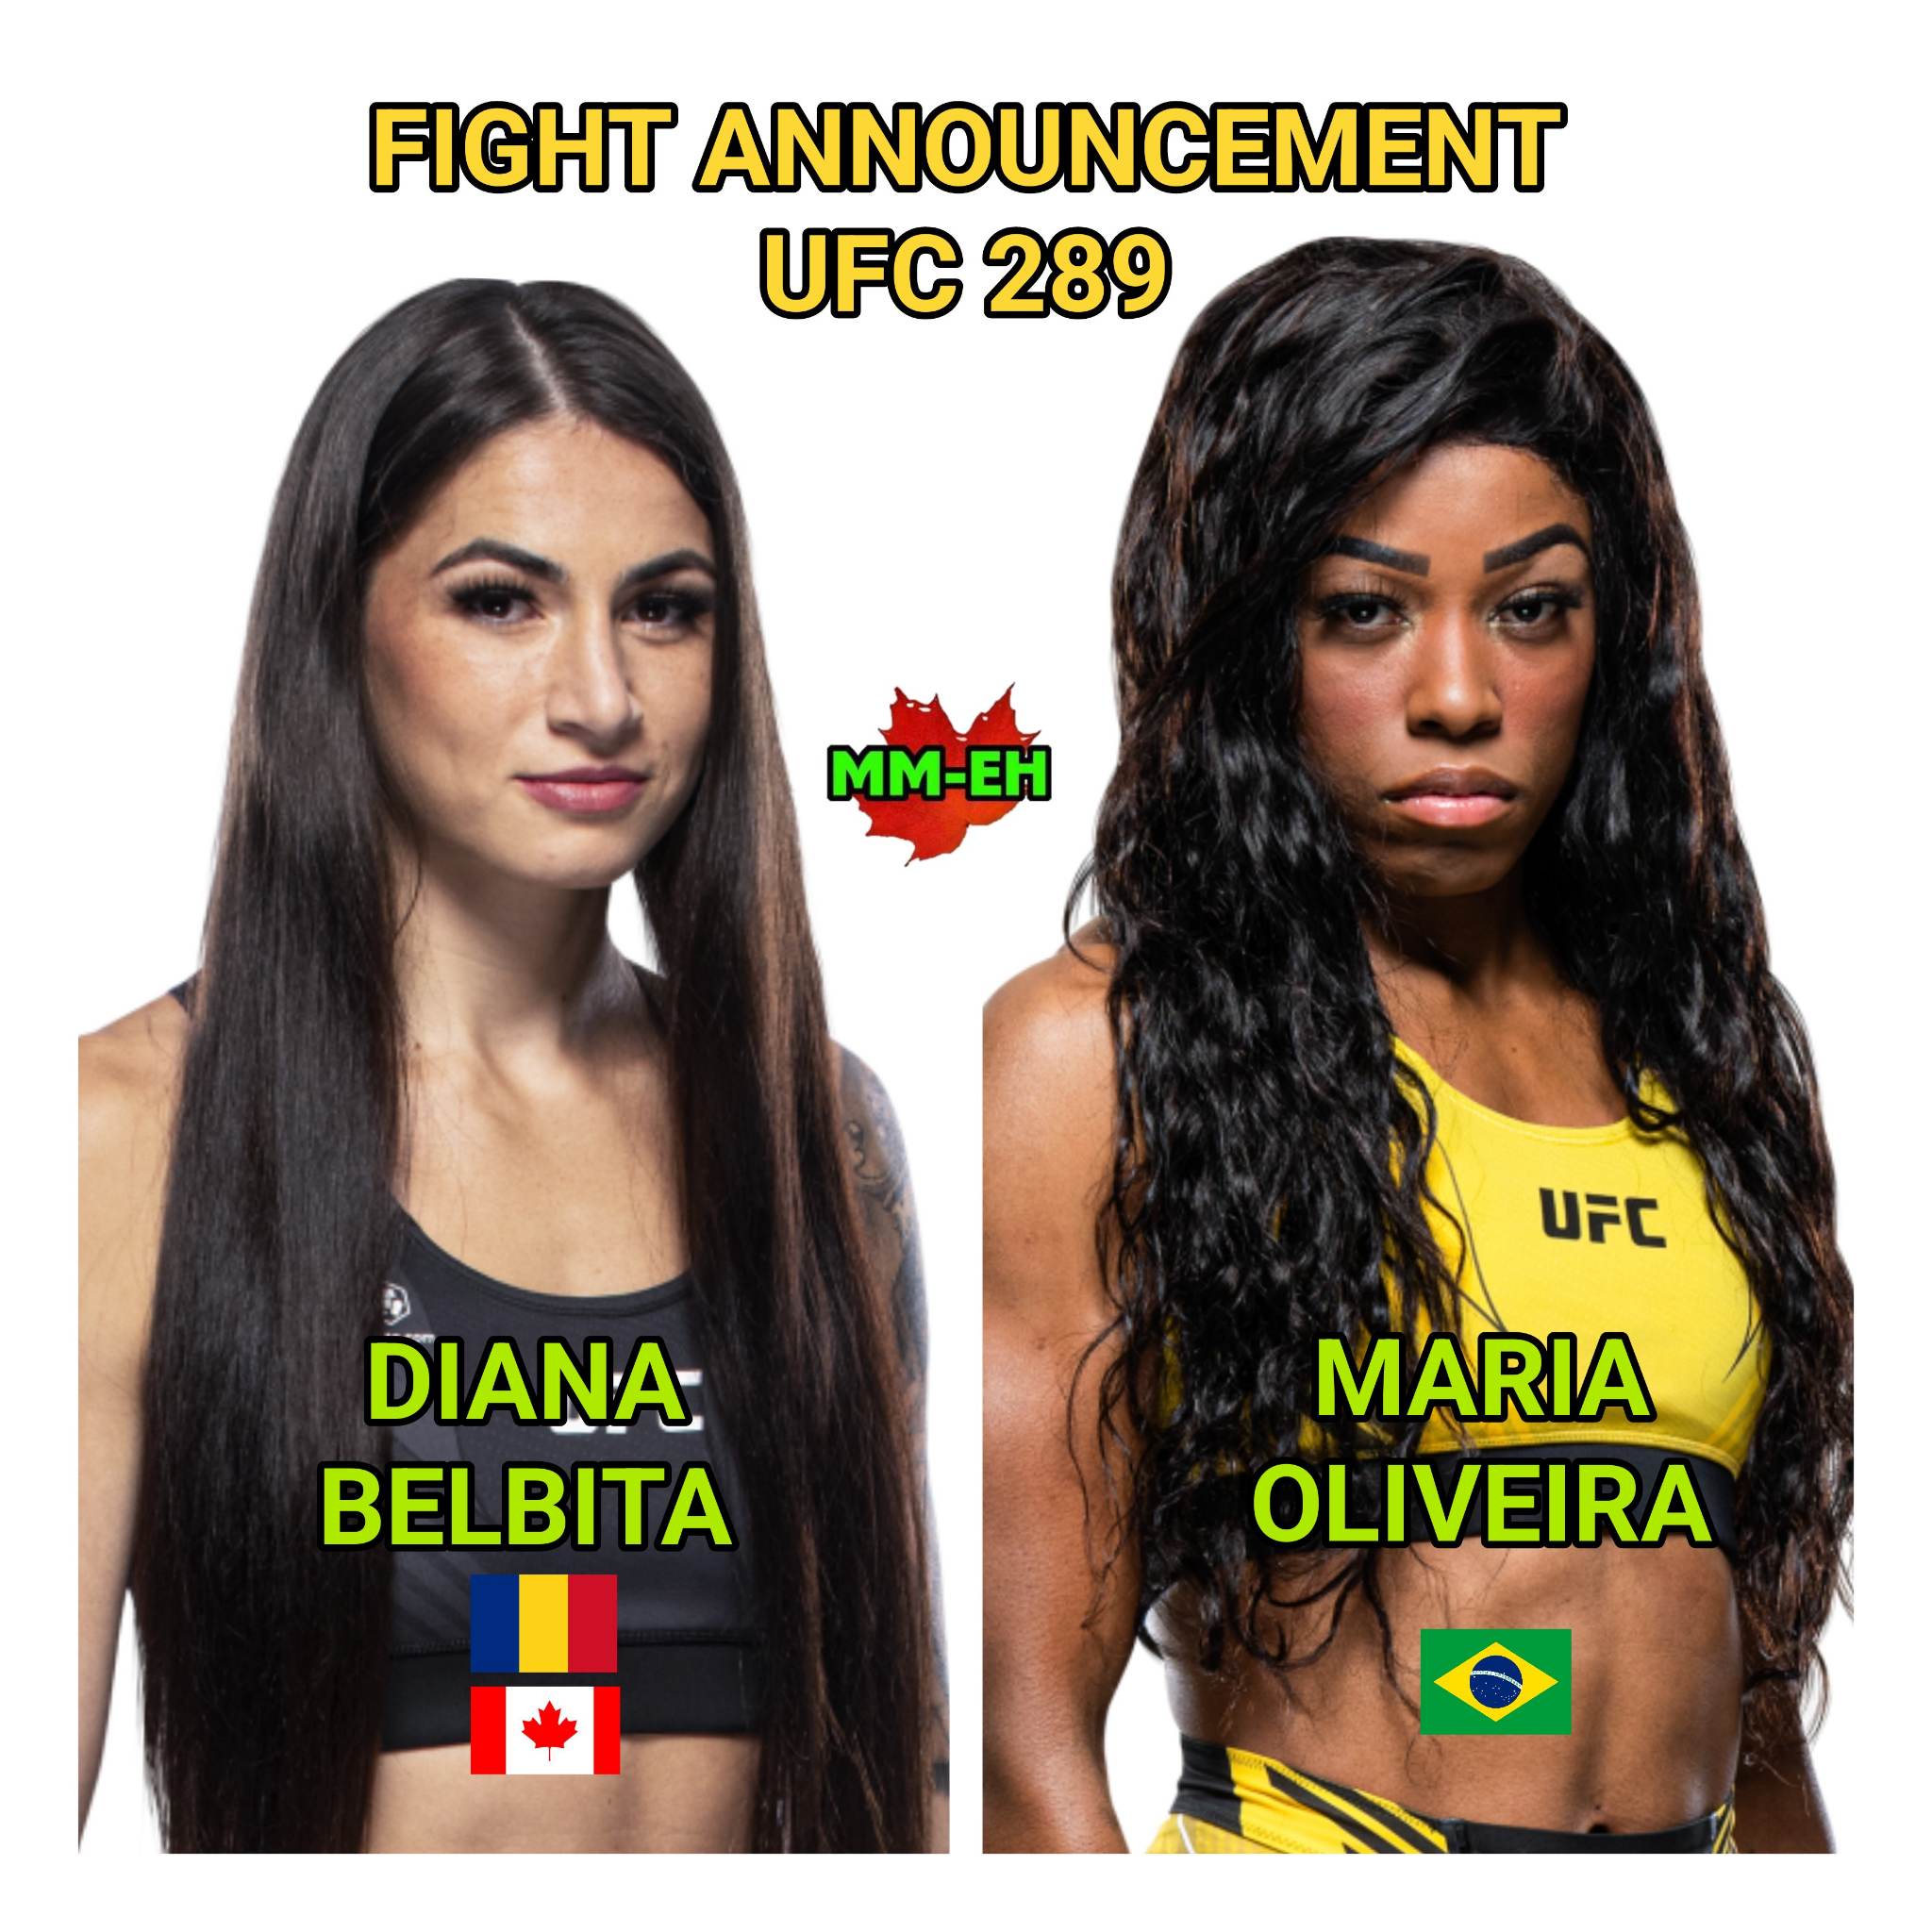 Diana Belbiţă gets UFC Return at UFC 289